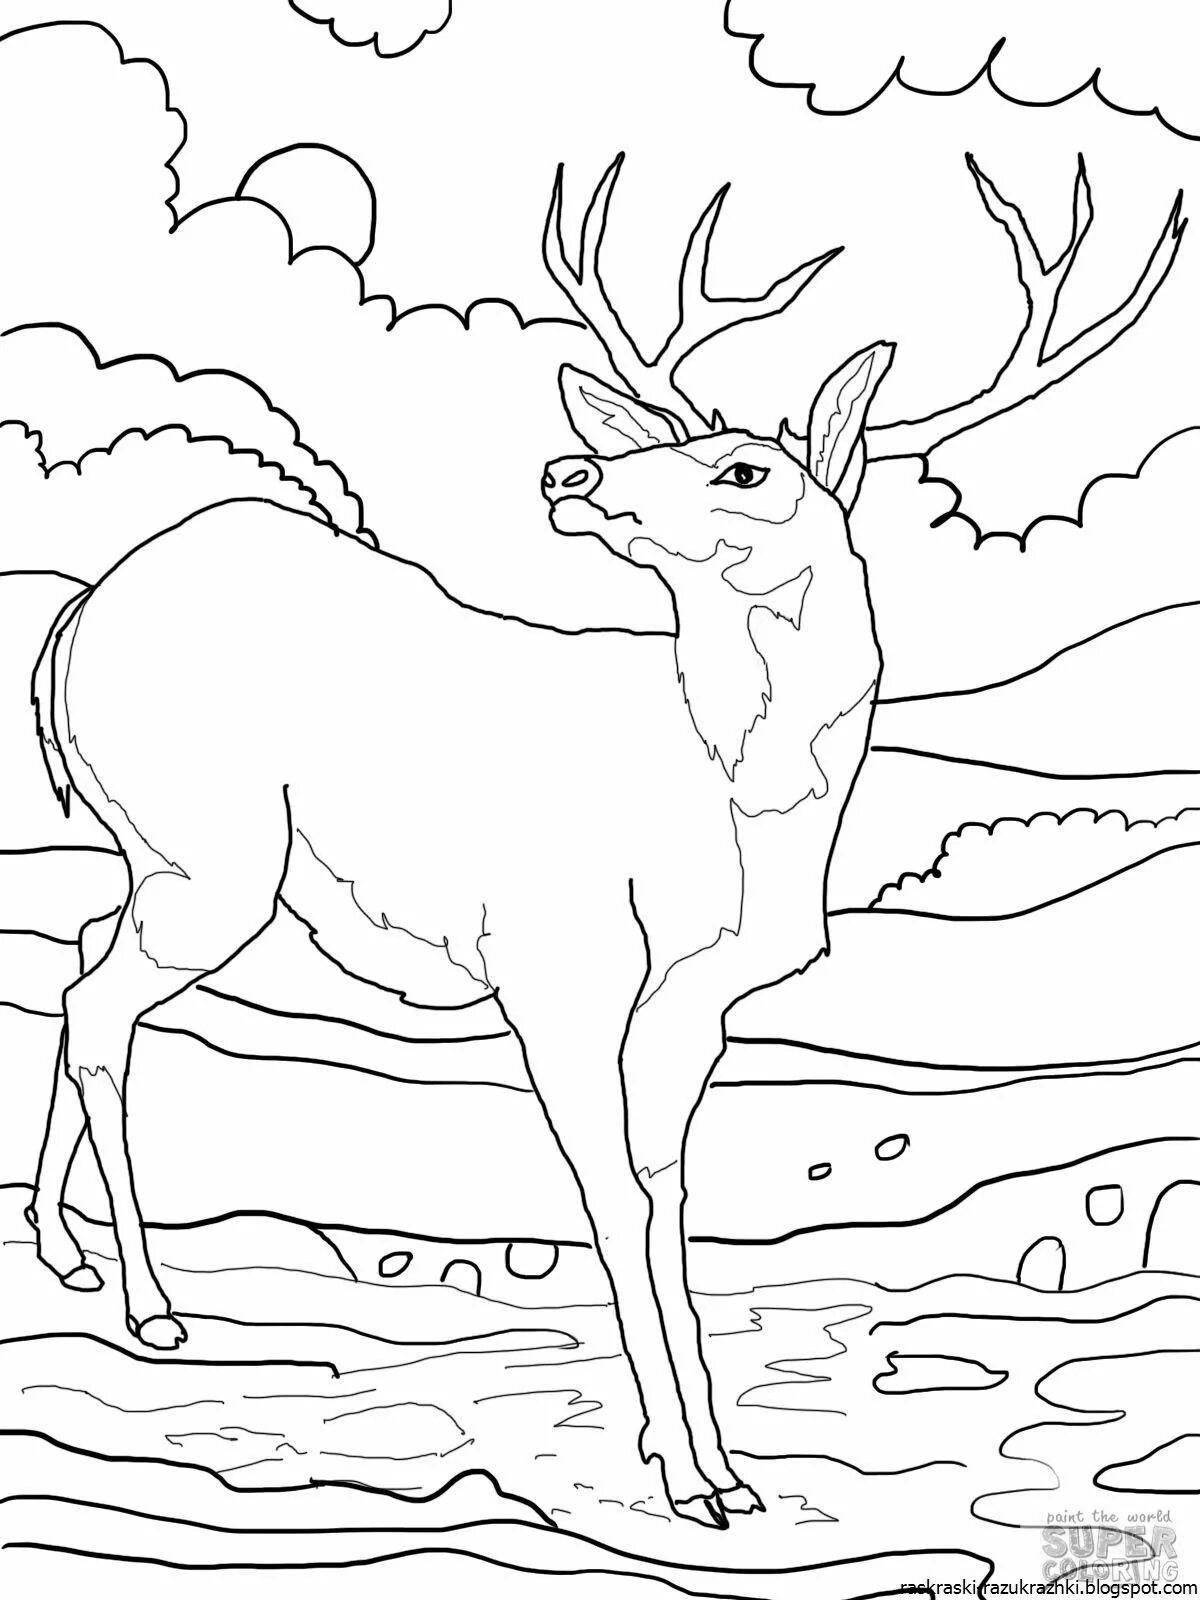 Joyful tundra animal coloring book